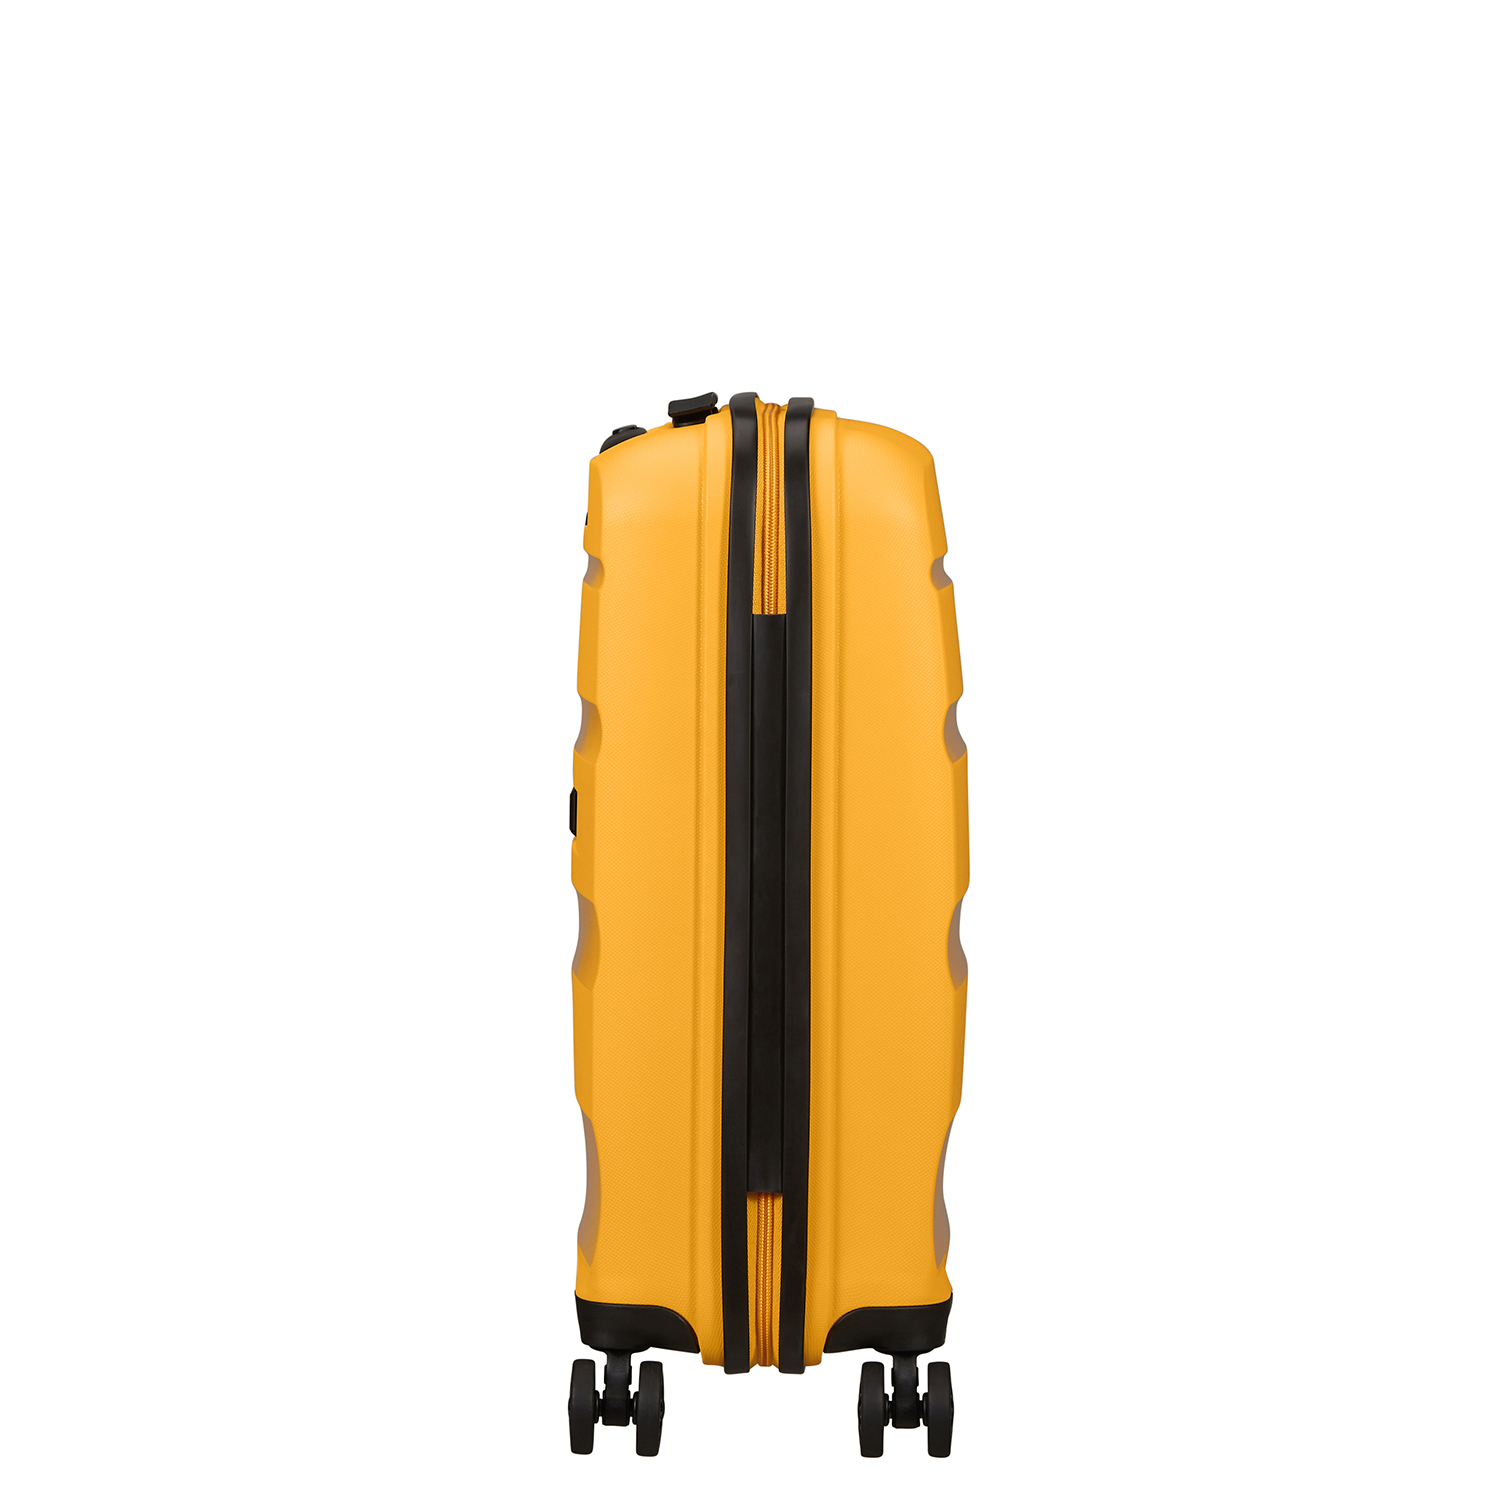 BON AIR DLX- Spinner 4 Tekerlekli Kabin Boy Valiz 55 cm SMB2-001-SF000*26